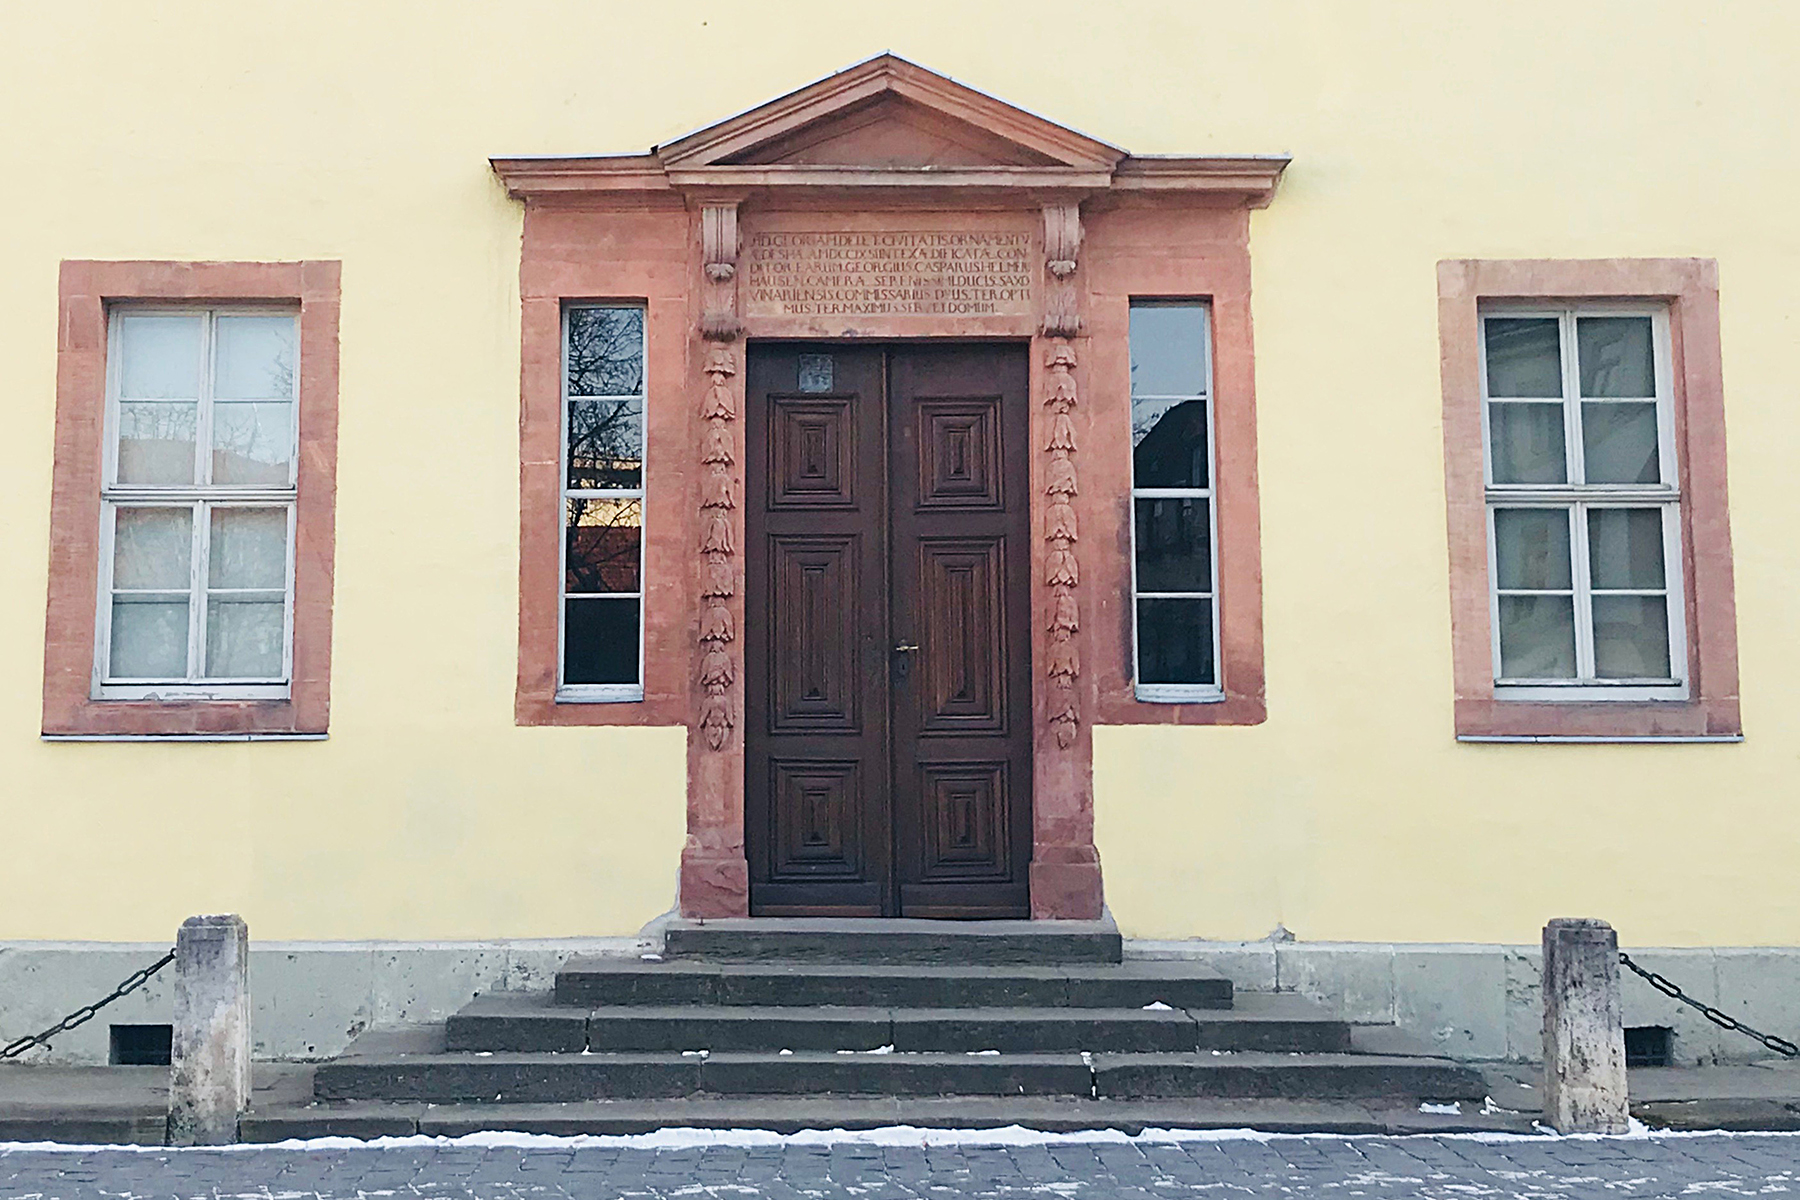 Goethe in Weimar: 9 Orte in Weimar, wo man Johann Wolfgang von Goethe begegnet